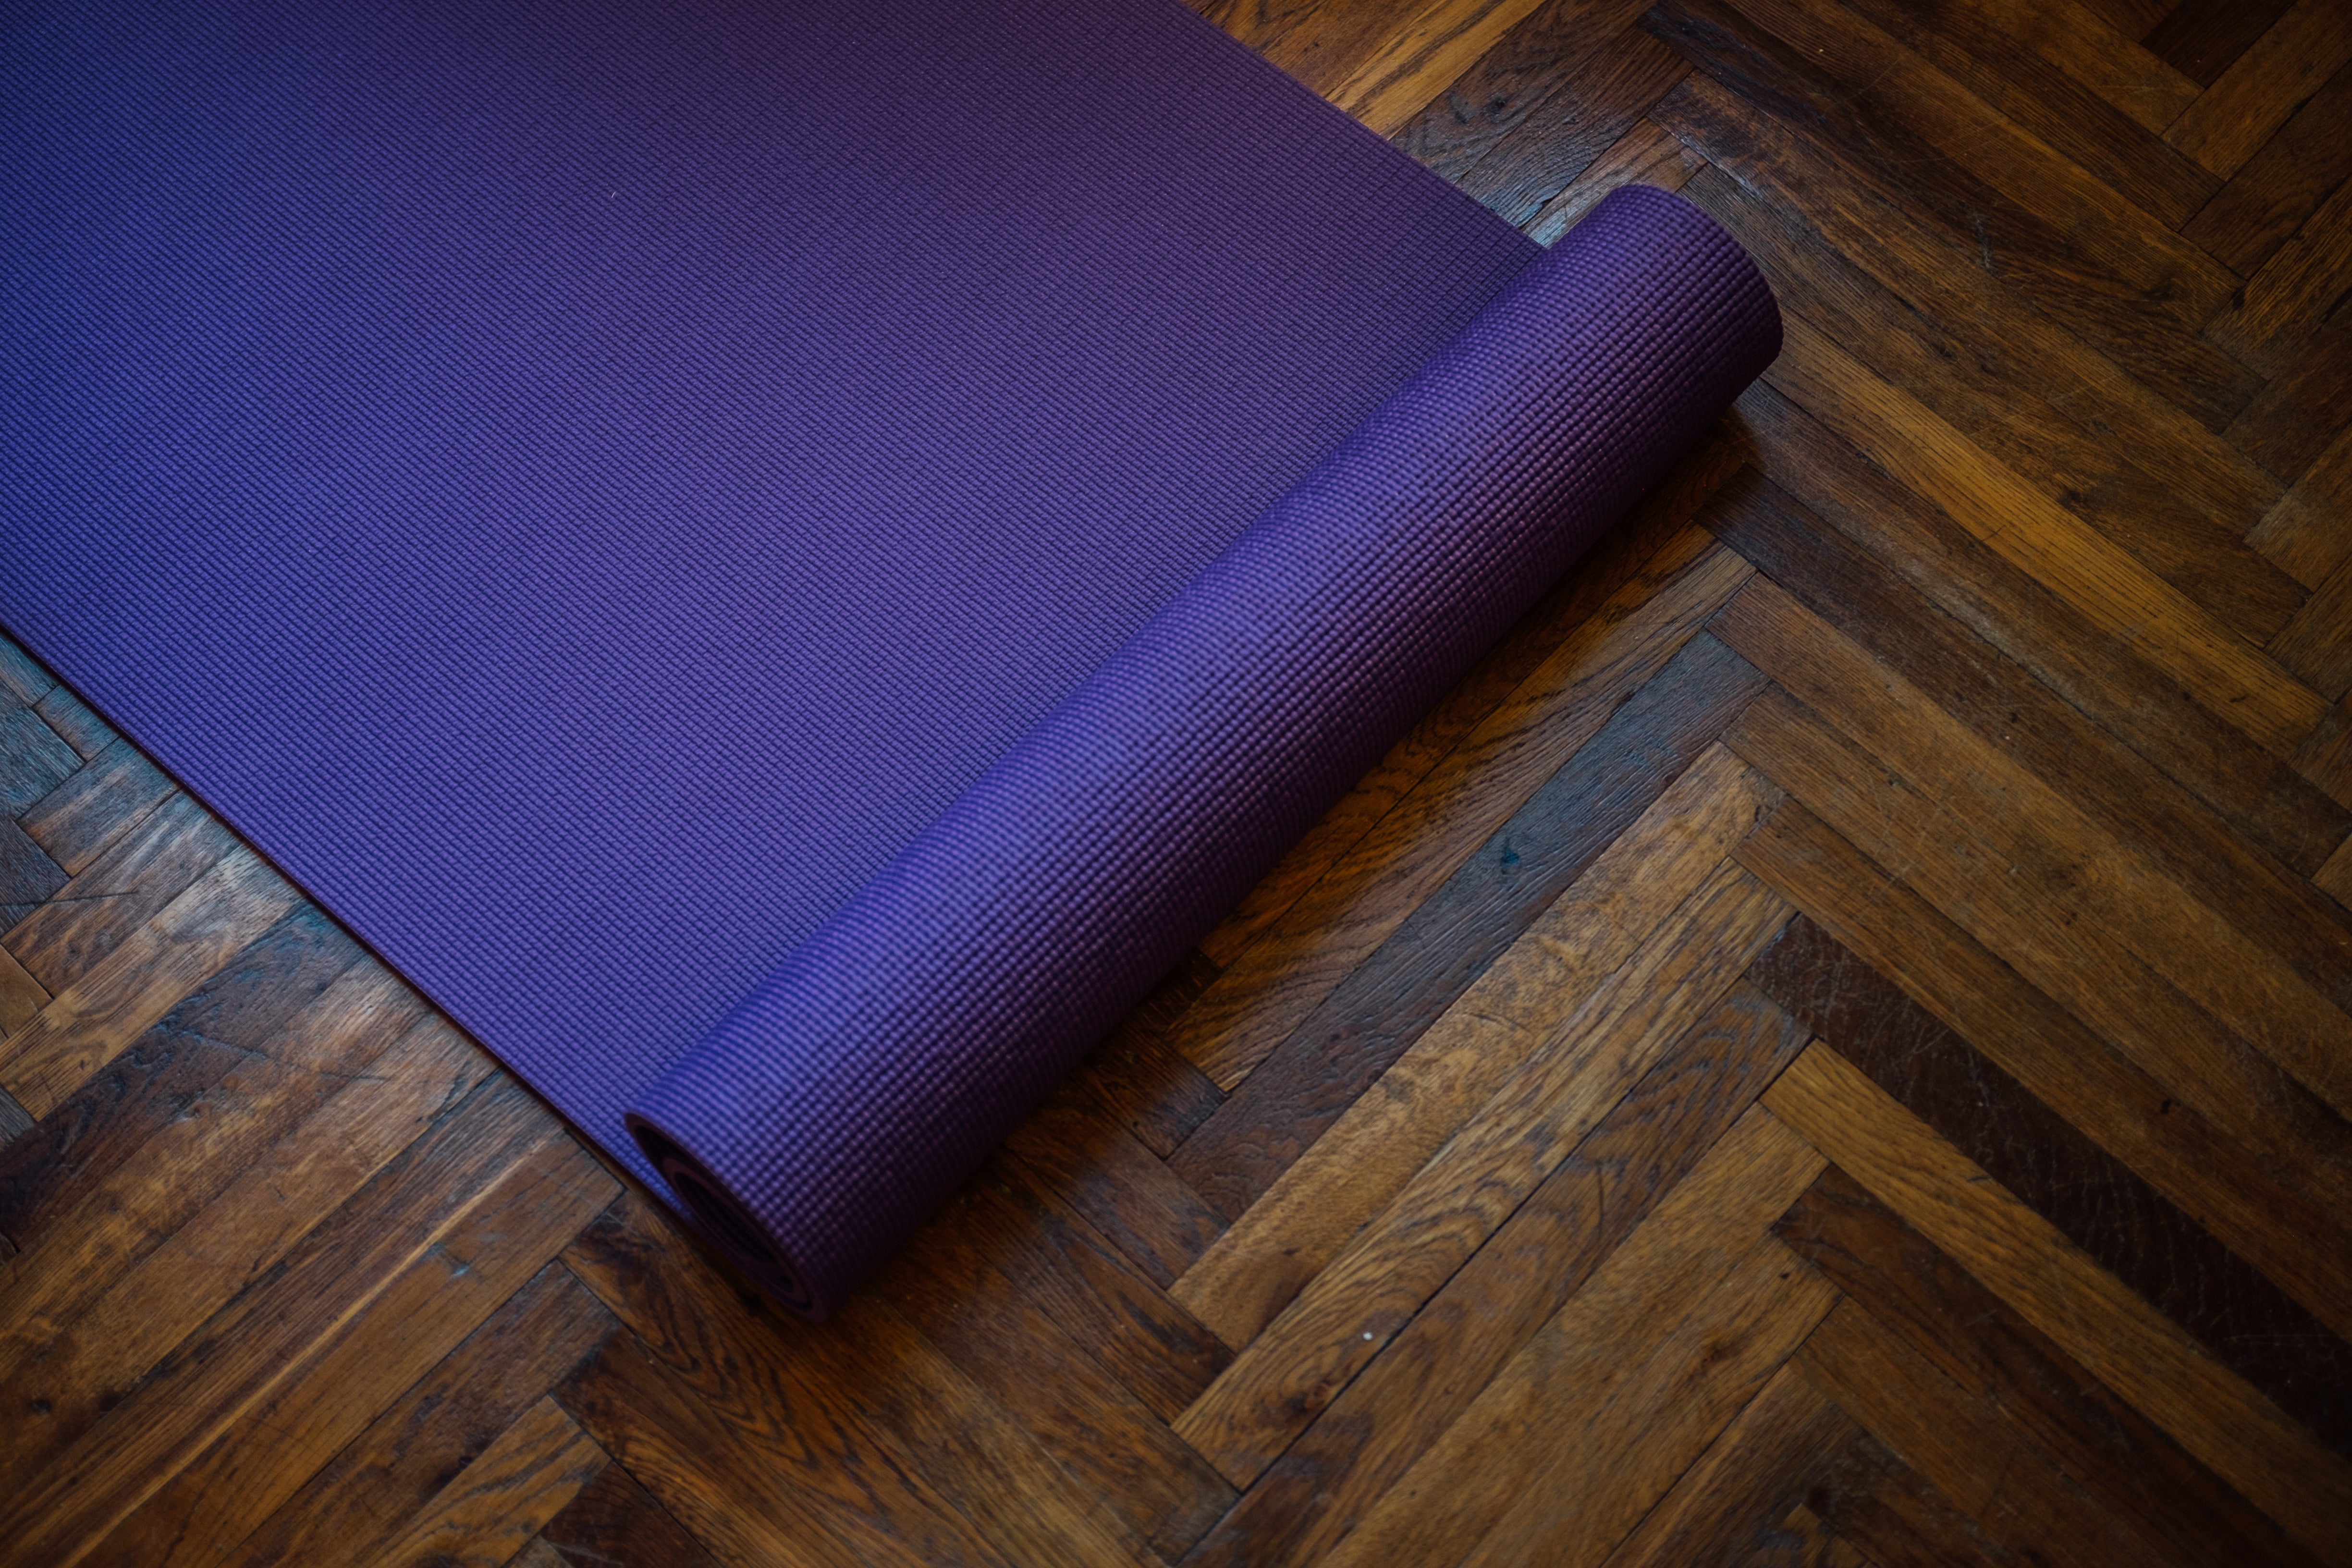 https://burst.shopifycdn.com/photos/purple-yoga-mat-partially-rolled-on-a-wooden-floor.jpg?exif=0&iptc=0